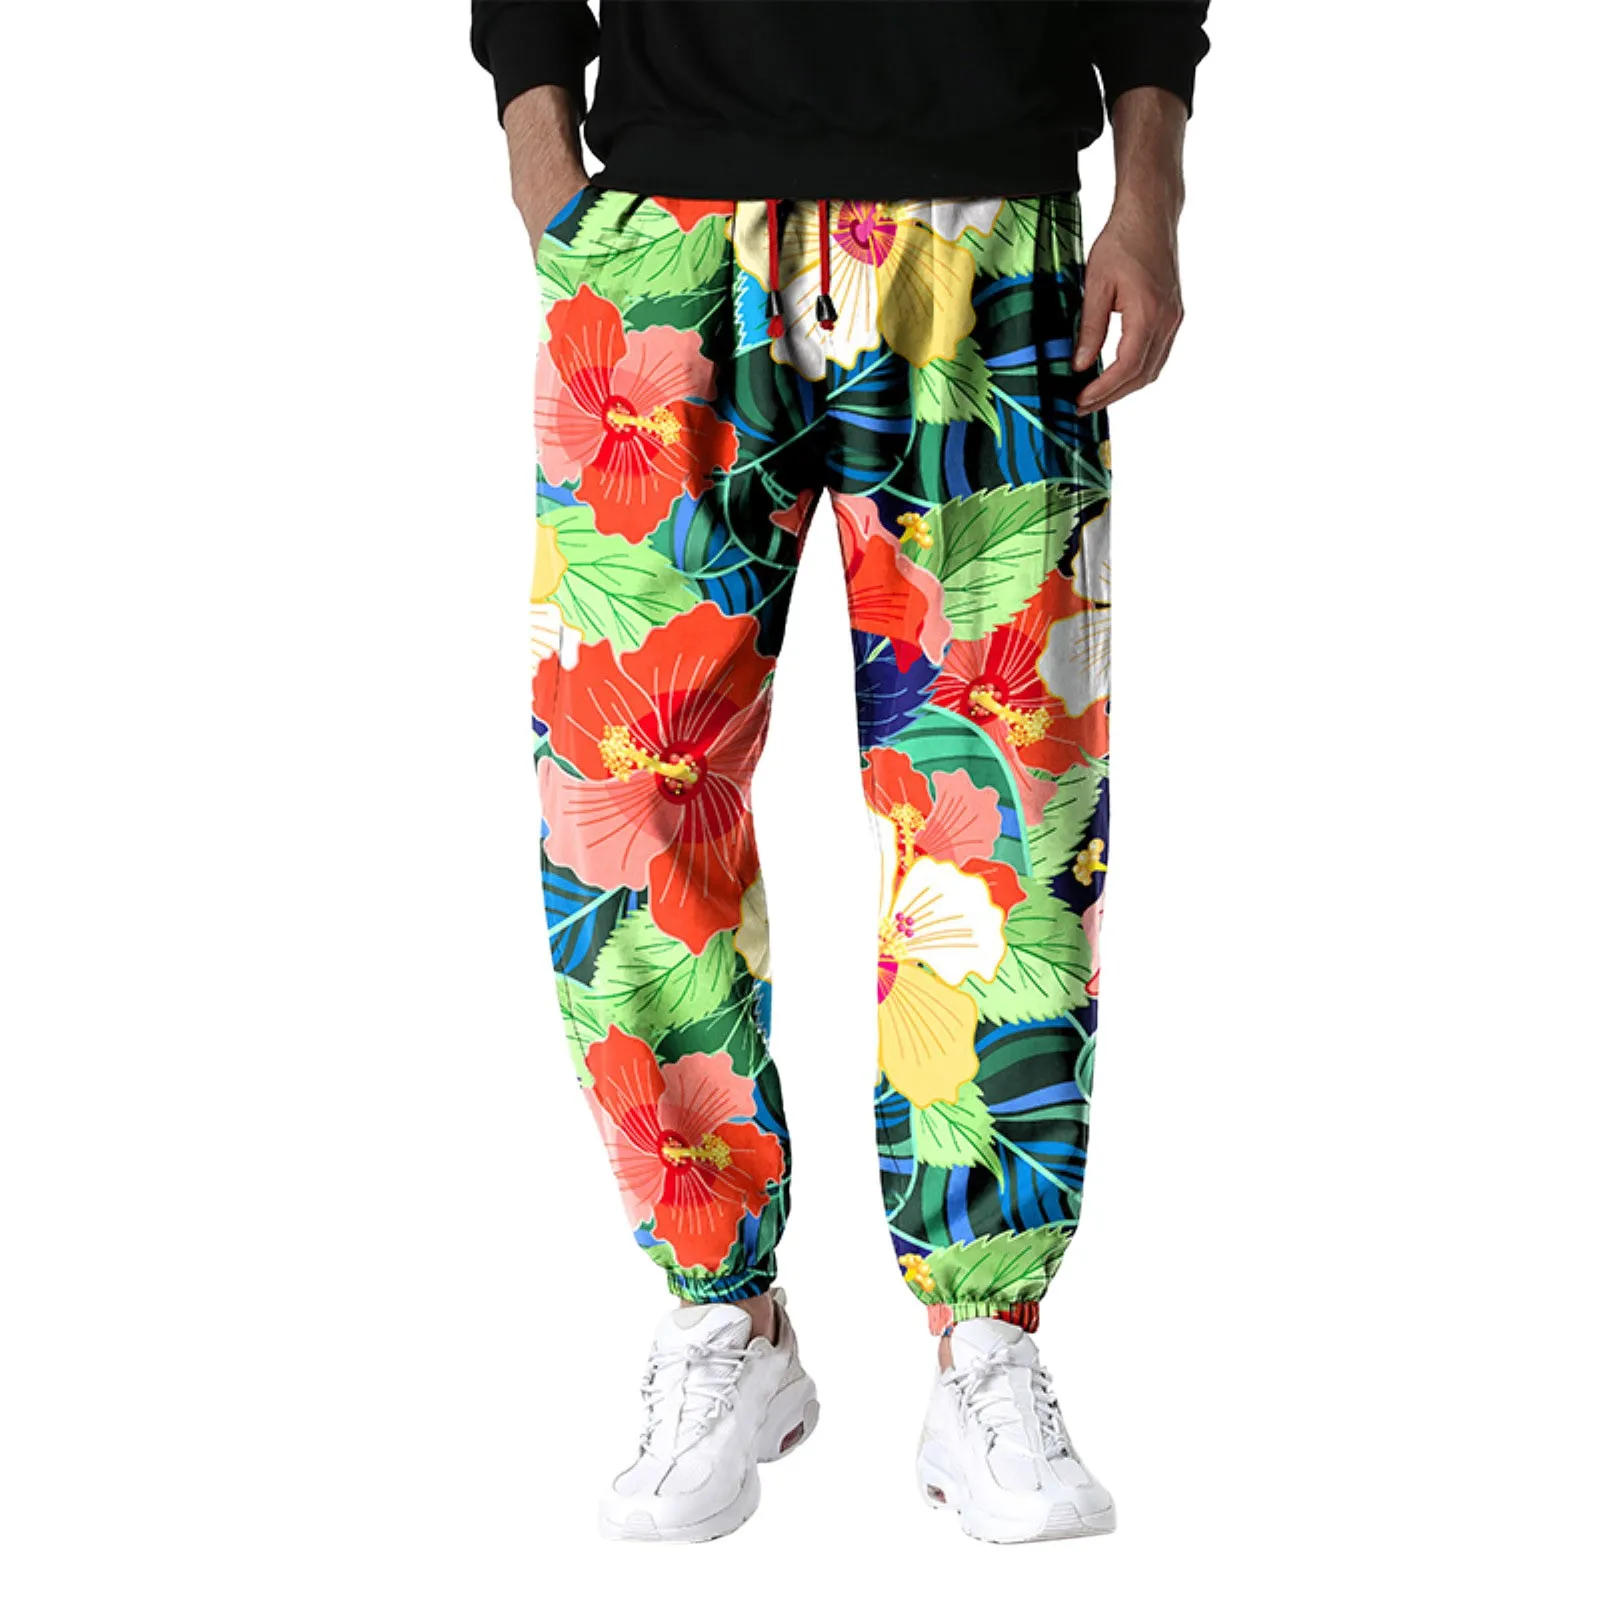 

Hawaii Pattern Printed Men Spring Summer Pants Casual Versatile Painted Loose Big Size Pants Fashion Beach Pocket Pants Jogging